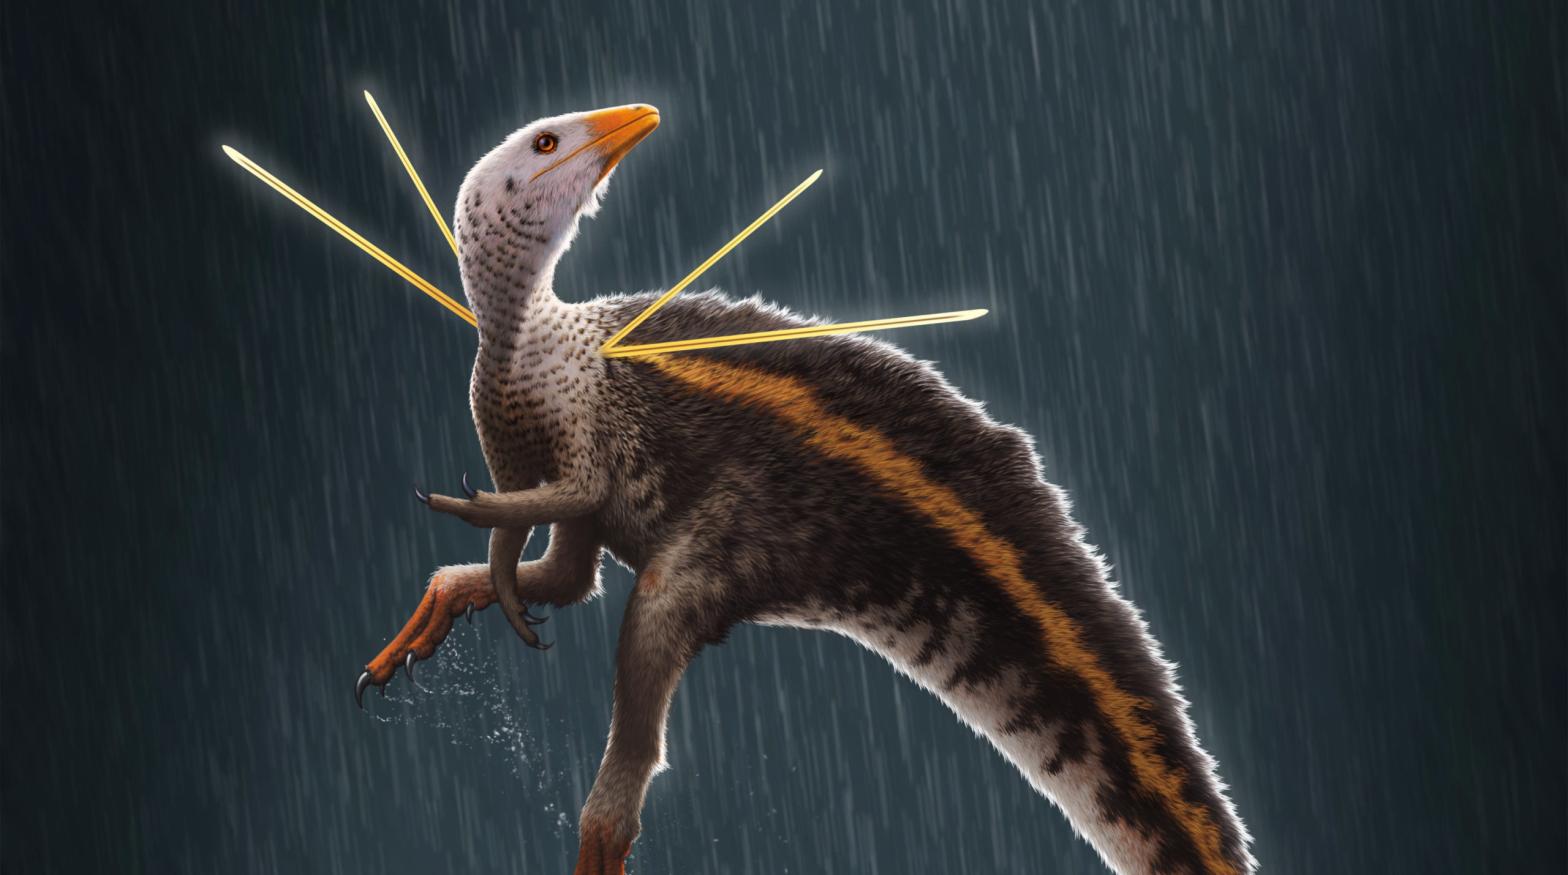 Artist's impression of Ubirajara jubatus. (Illustration: Bob Nicholls/Paleocreations.com 2020)